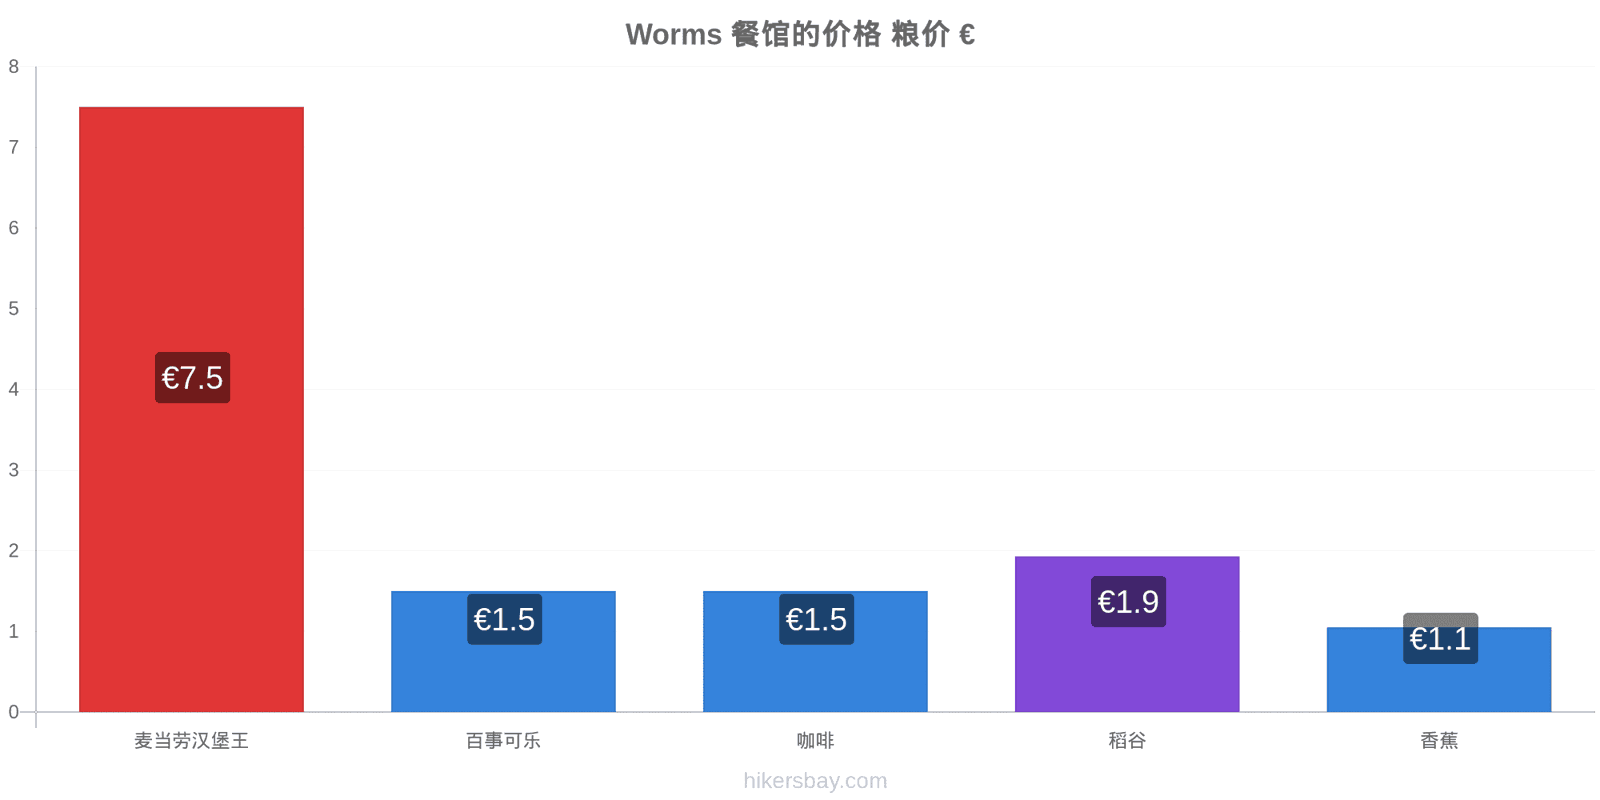 Worms 价格变动 hikersbay.com